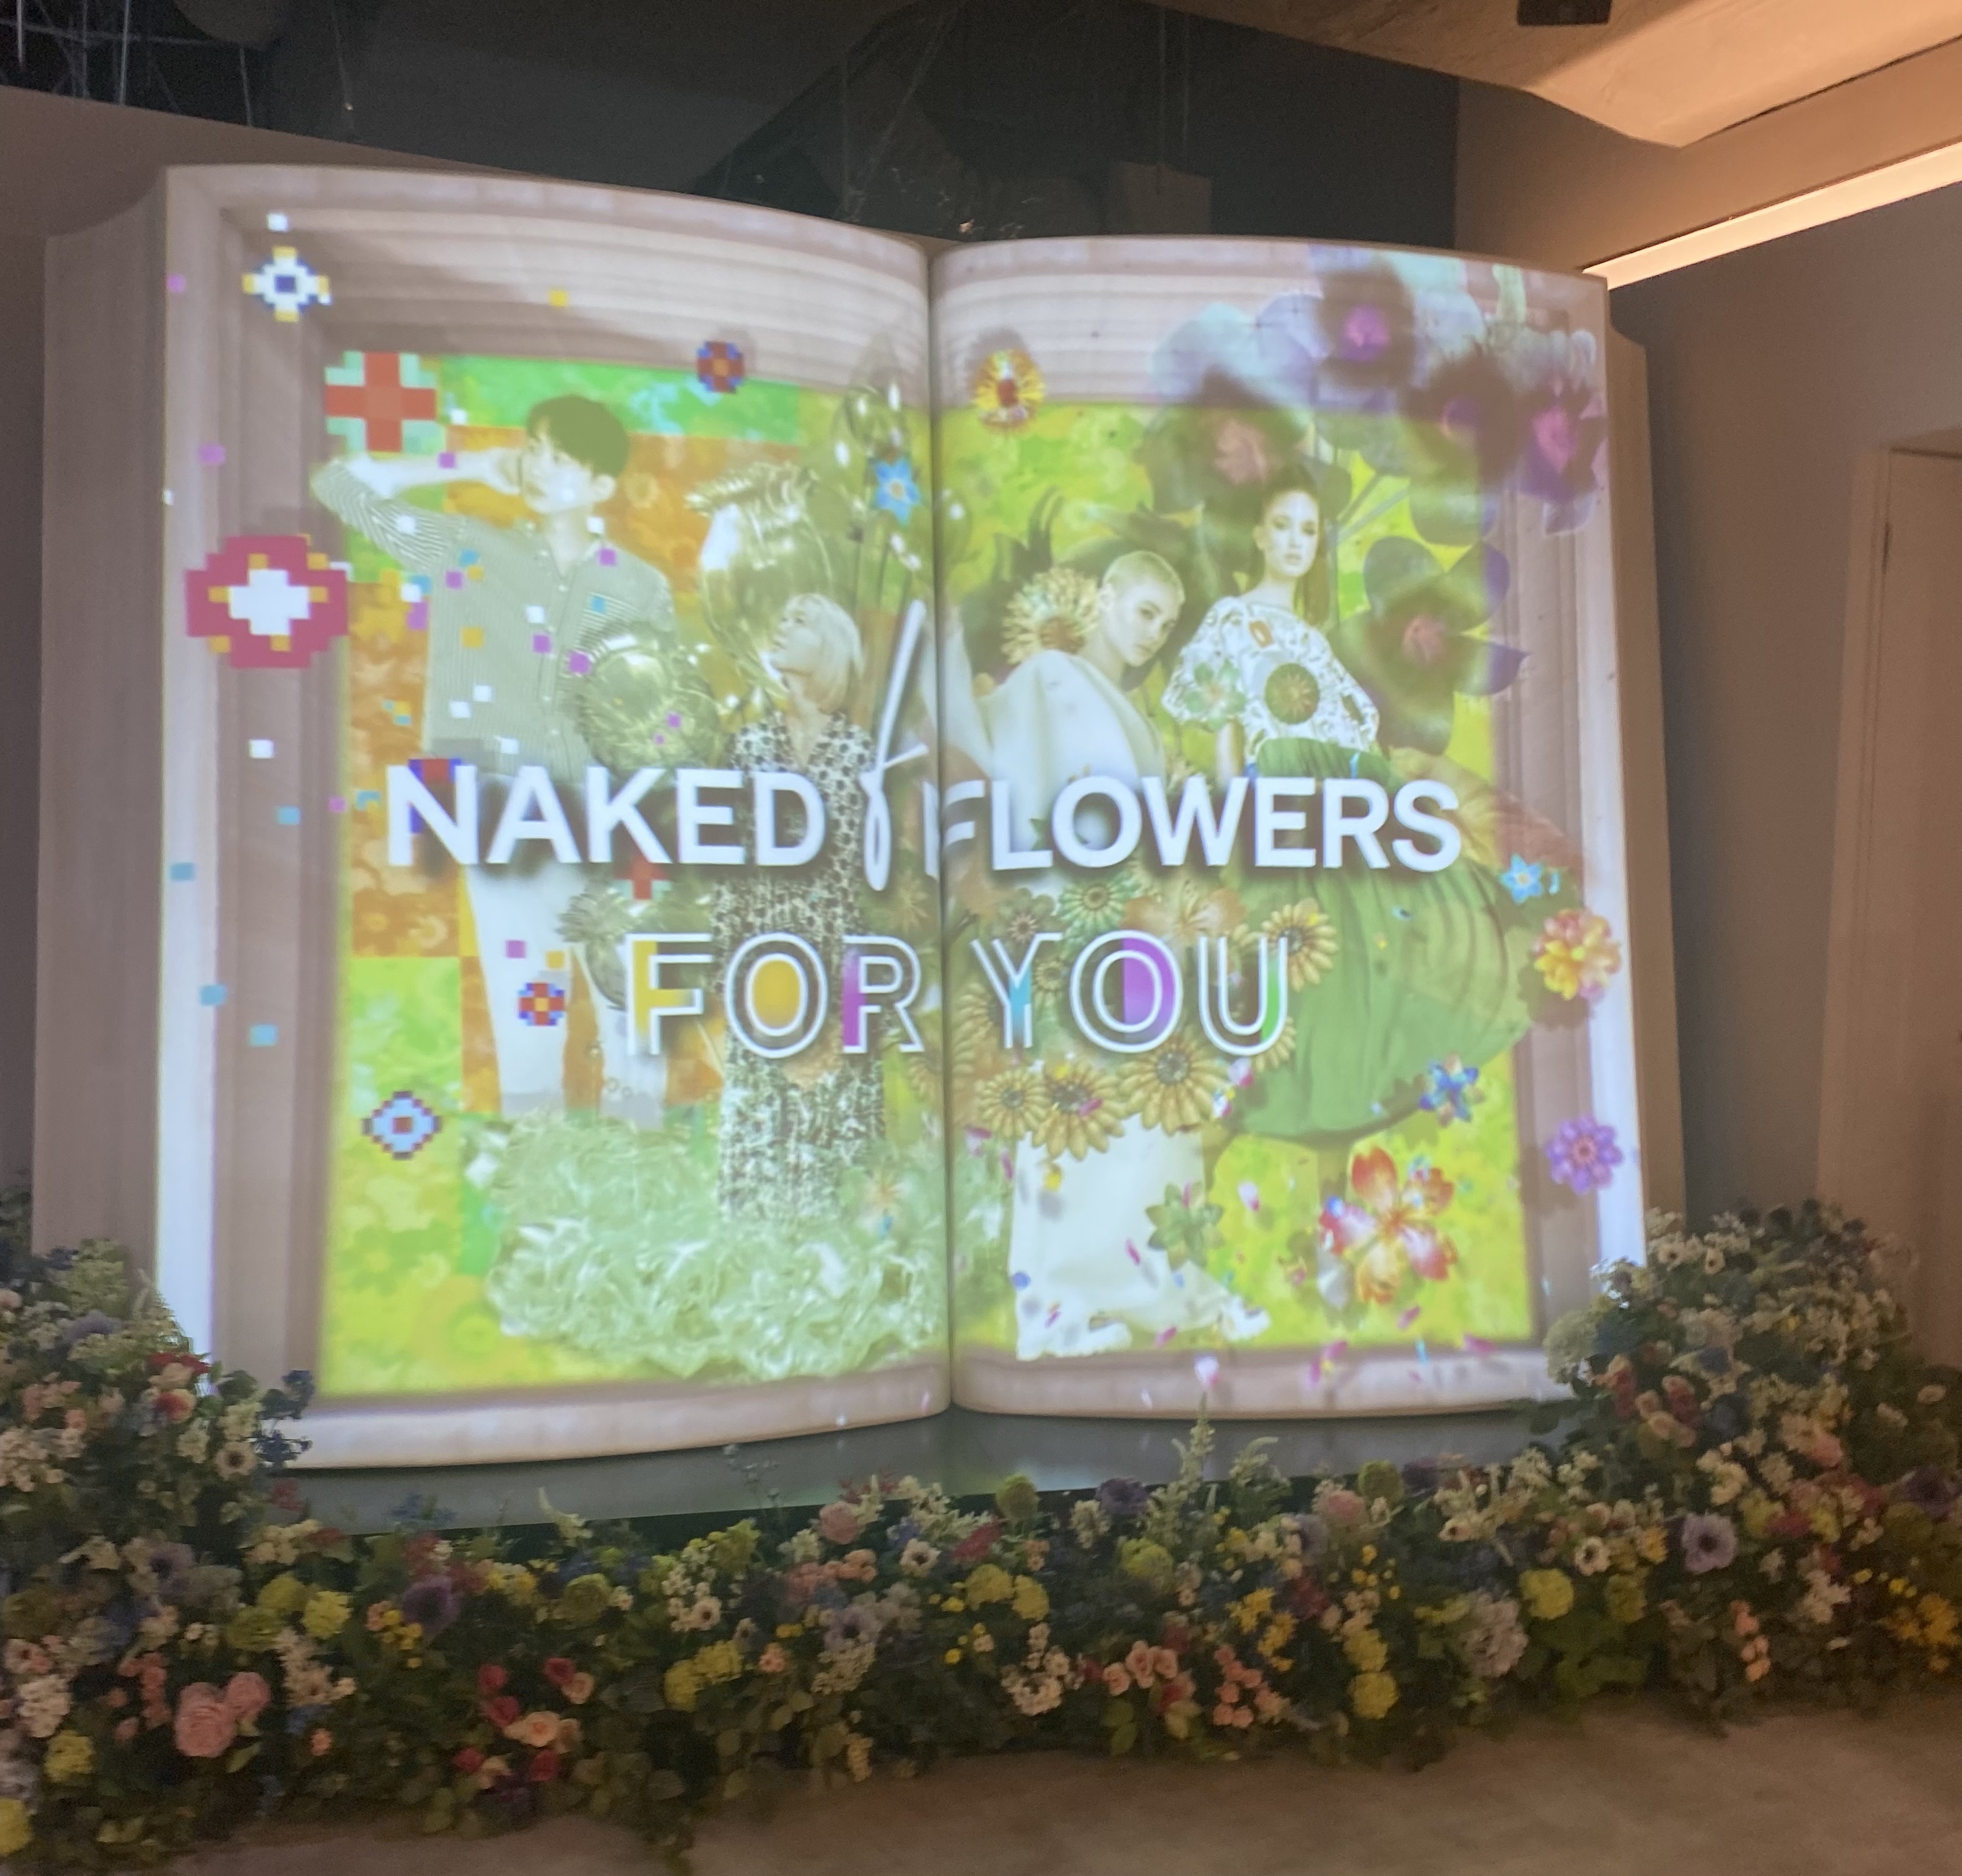 【NAKED FLOWERS FOR YOU】体験型😌❕ 国内初の新感覚フラワーアート施設が3月19日(日)にNEWオープン💐✨